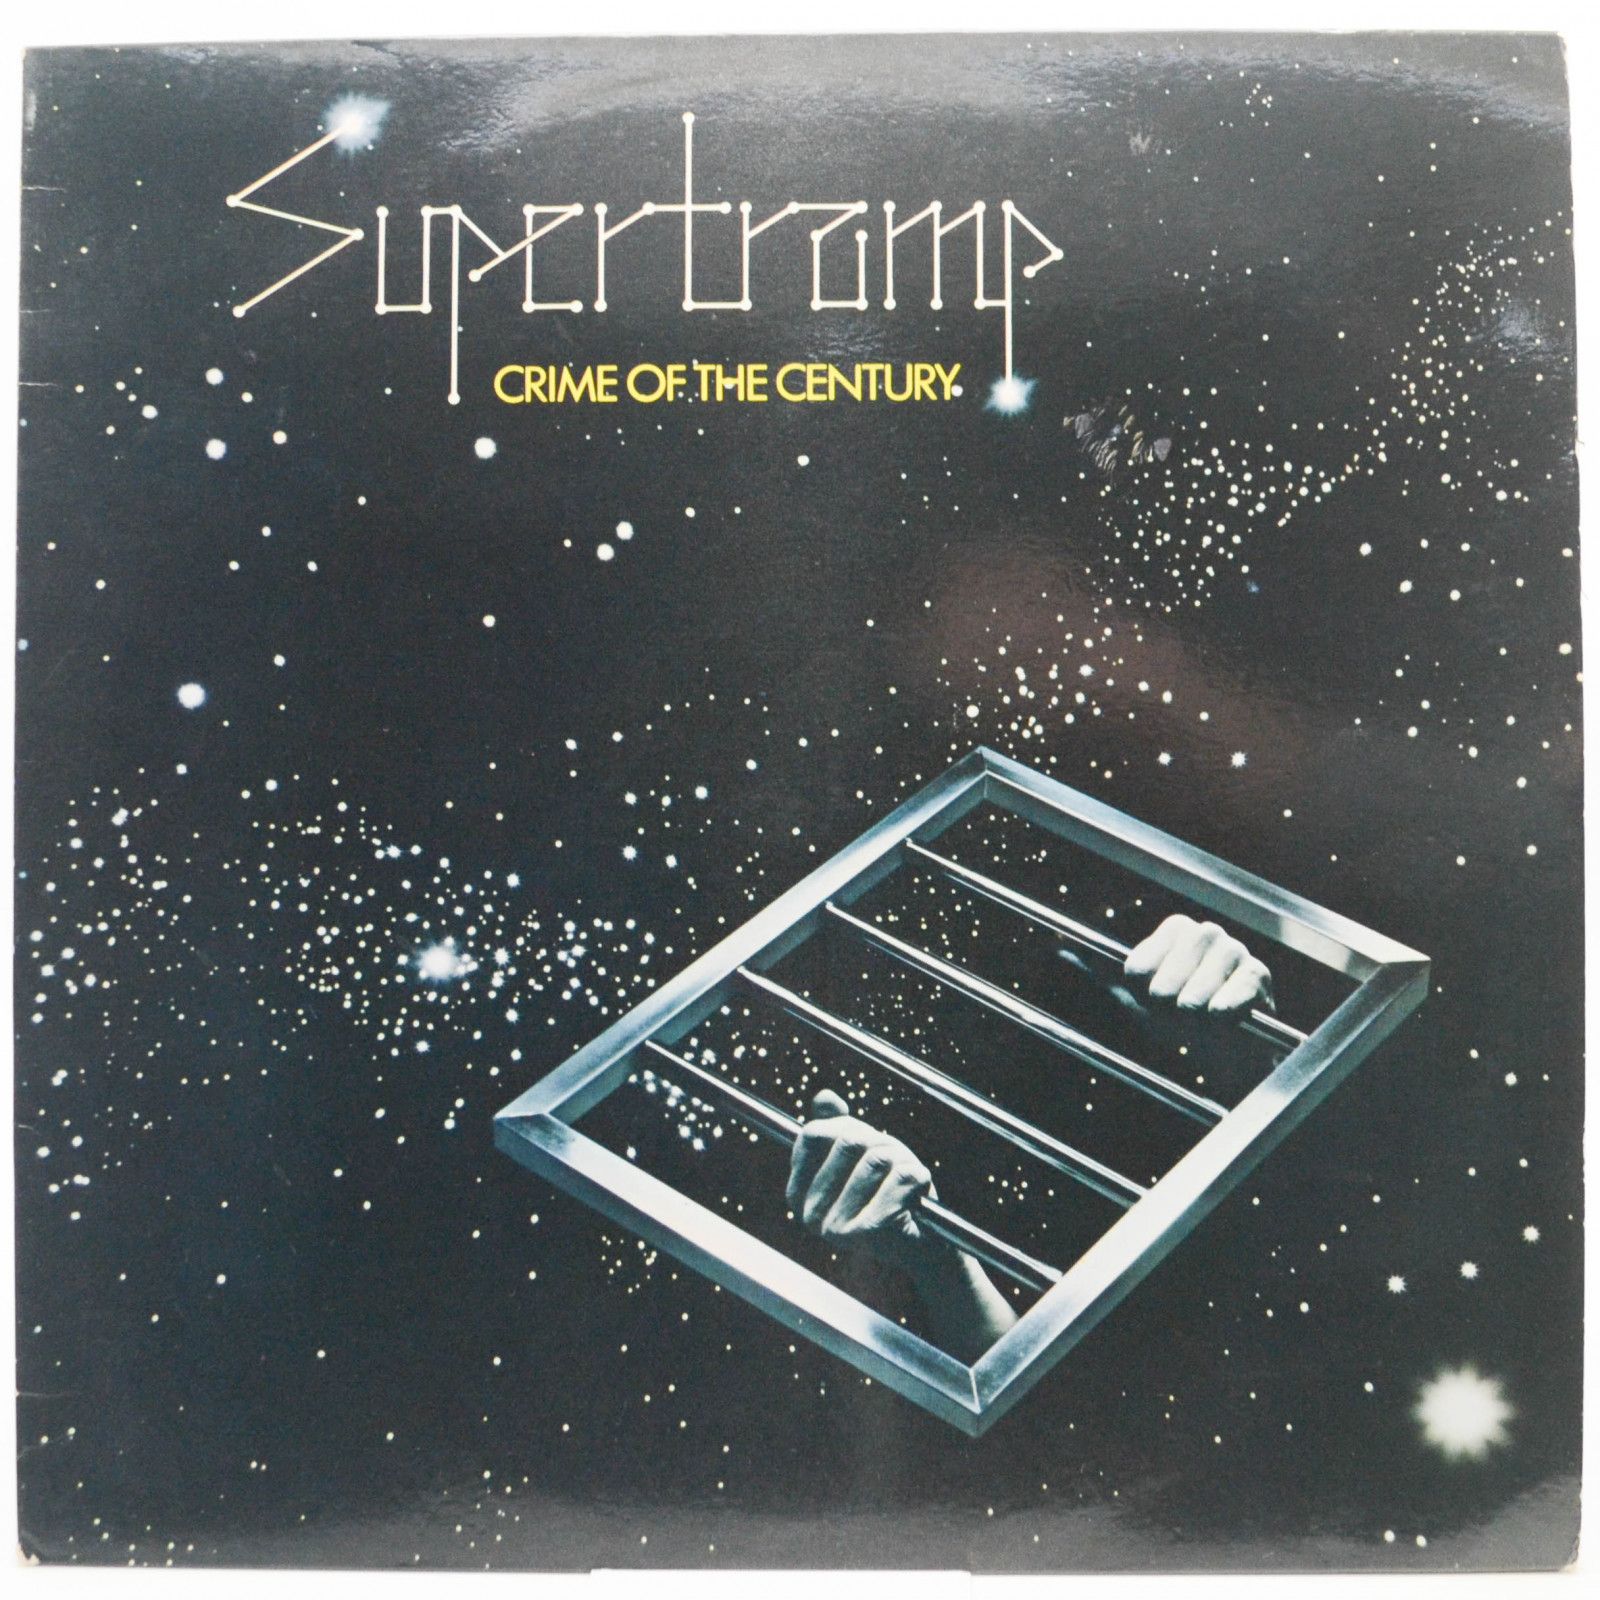 Supertramp — Crime Of The Century (1-st, UK), 1974